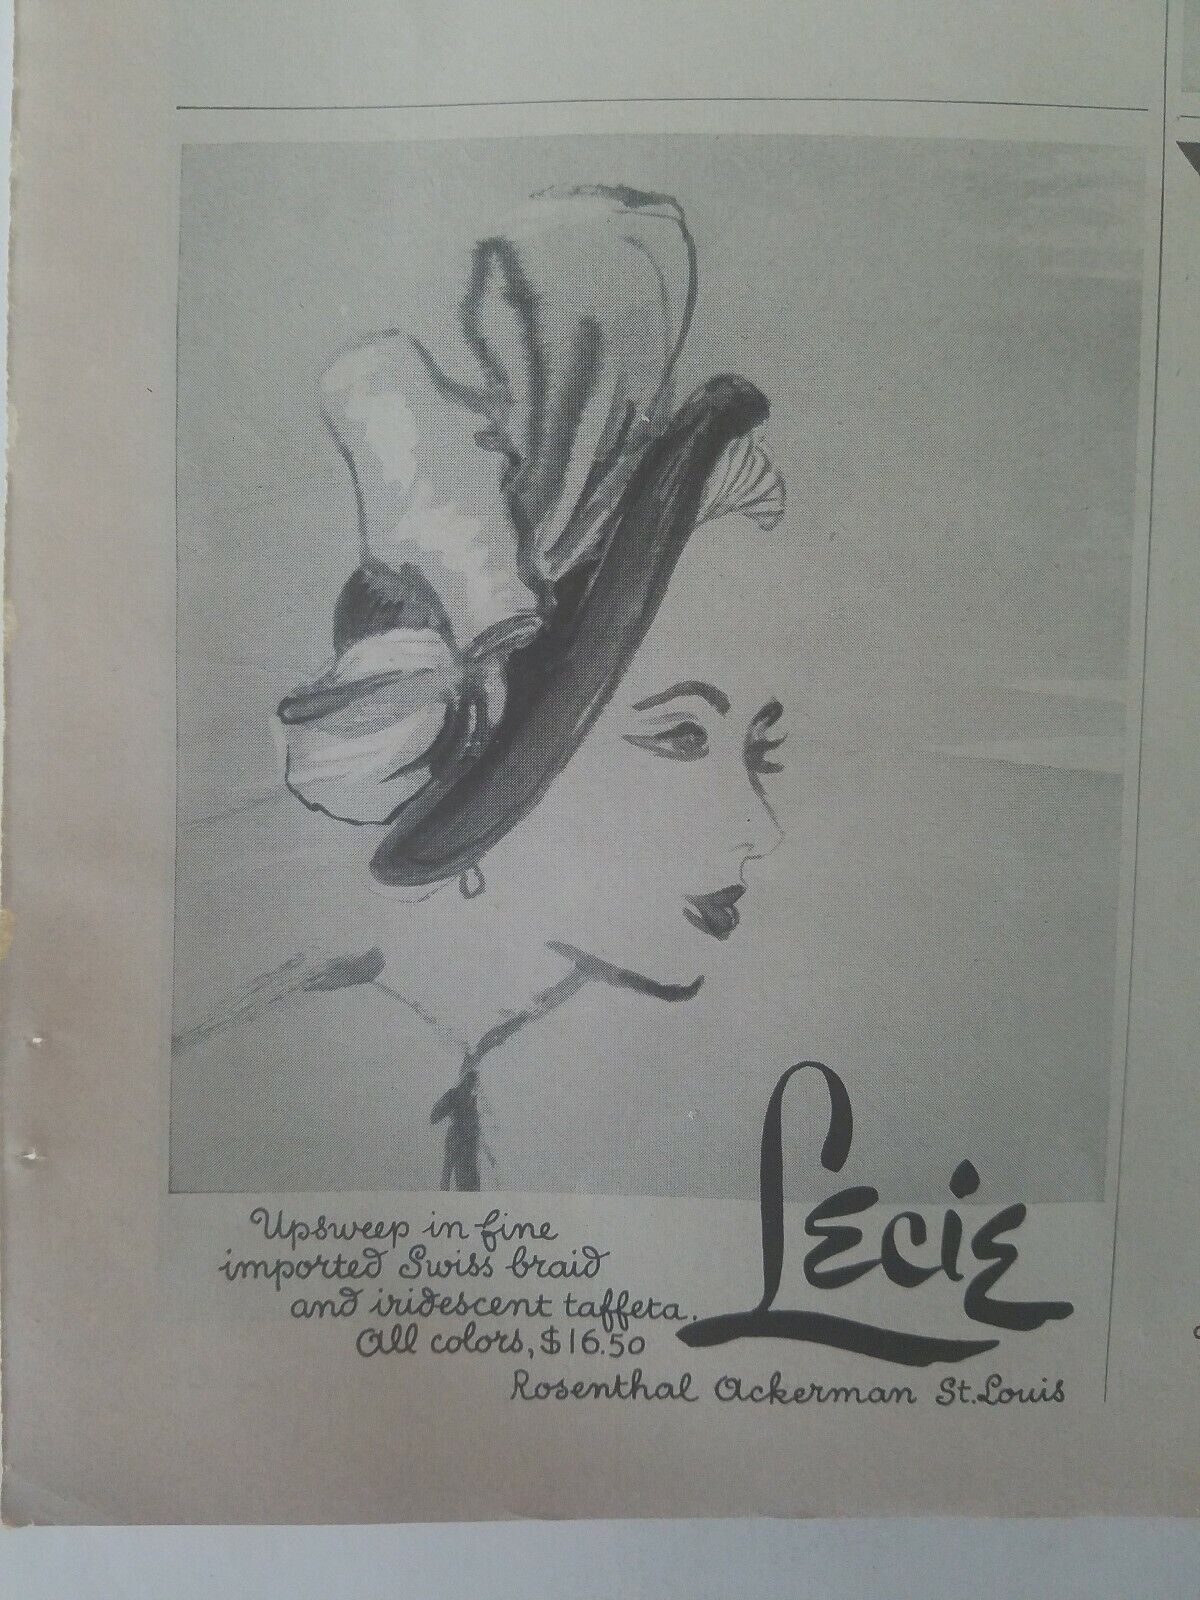 1949 womens Lecie hat imported swiss braid iridescent taffeta vintage fashion ad